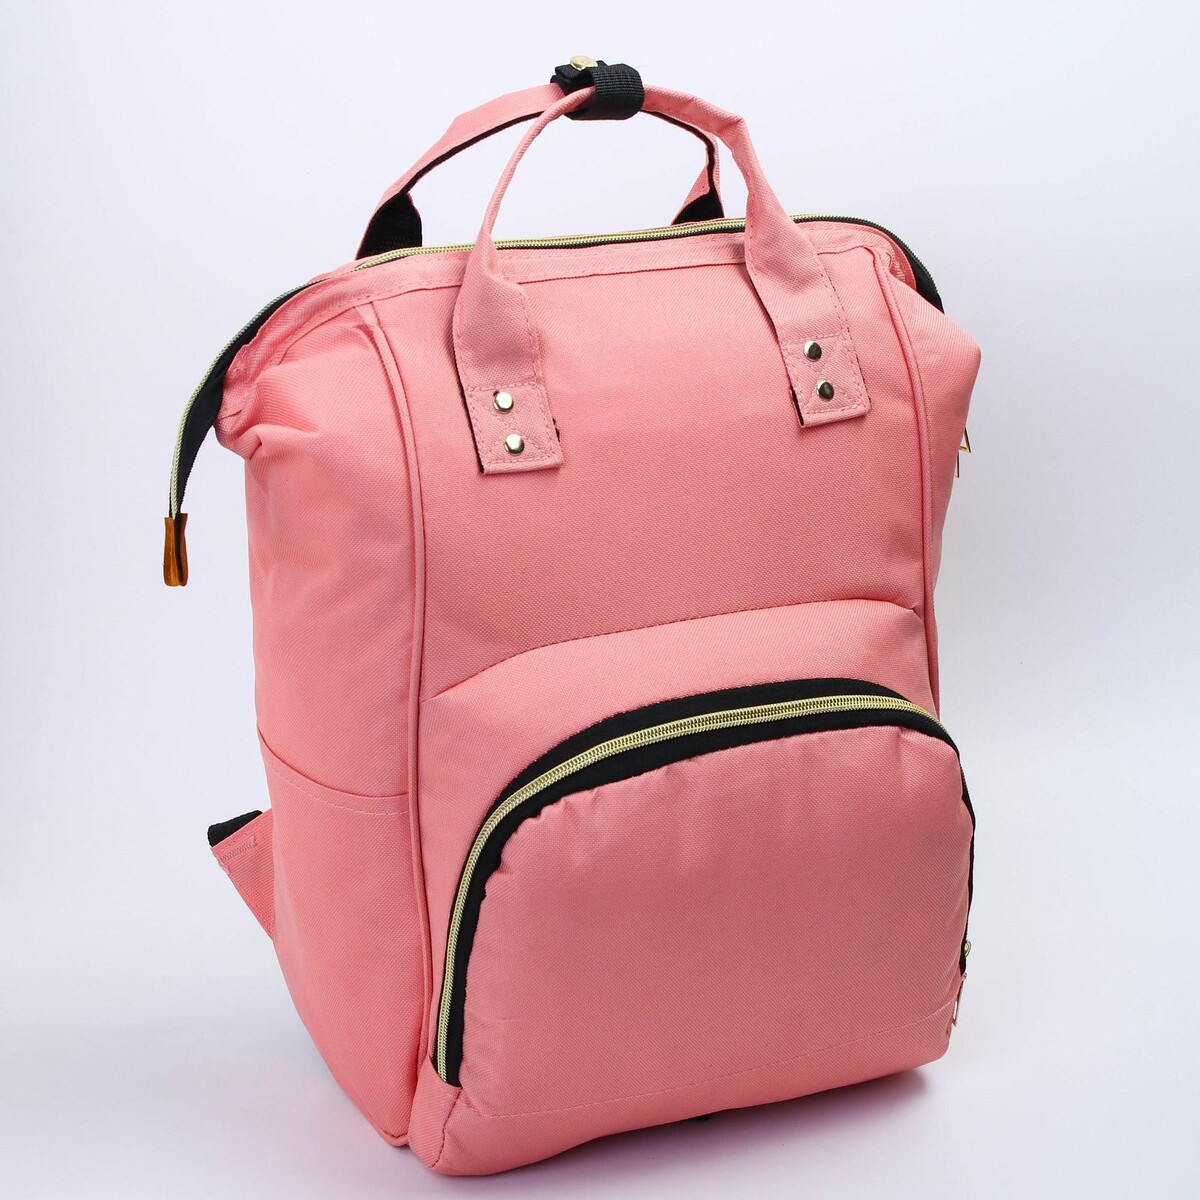 Рюкзак женский с термокарманом, термосумка - портфель, цвет розовый рюкзак женский с термокарманом термосумка портфель бирюзовый